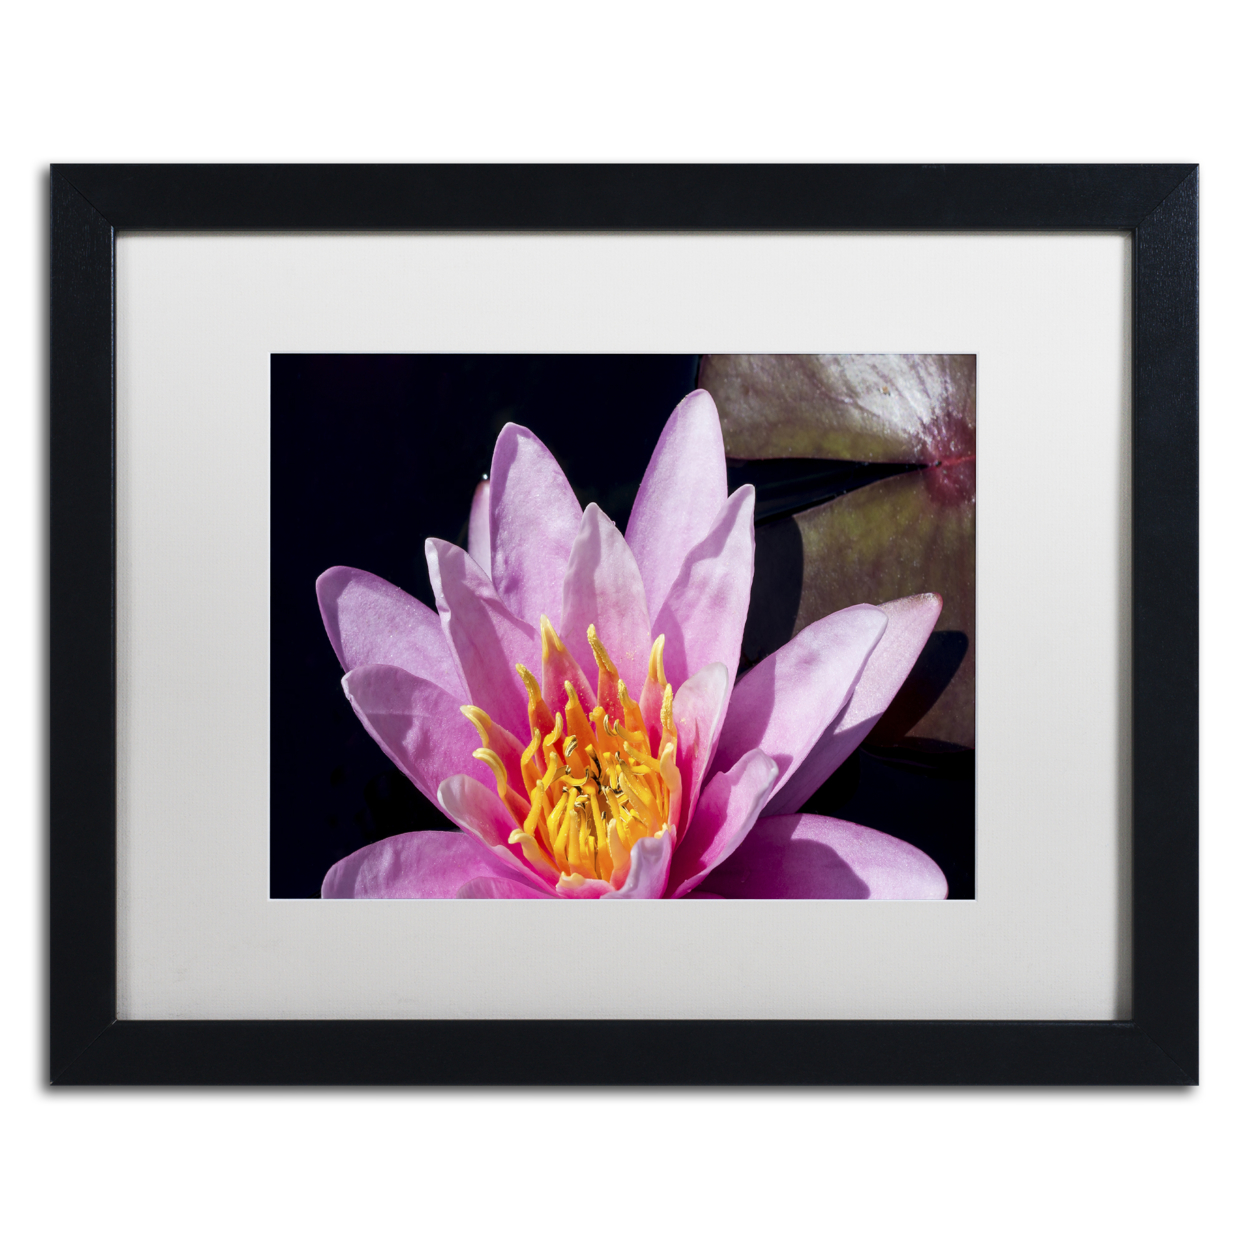 Kurt Shaffer 'Pink Water Lily' Black Wooden Framed Art 18 X 22 Inches